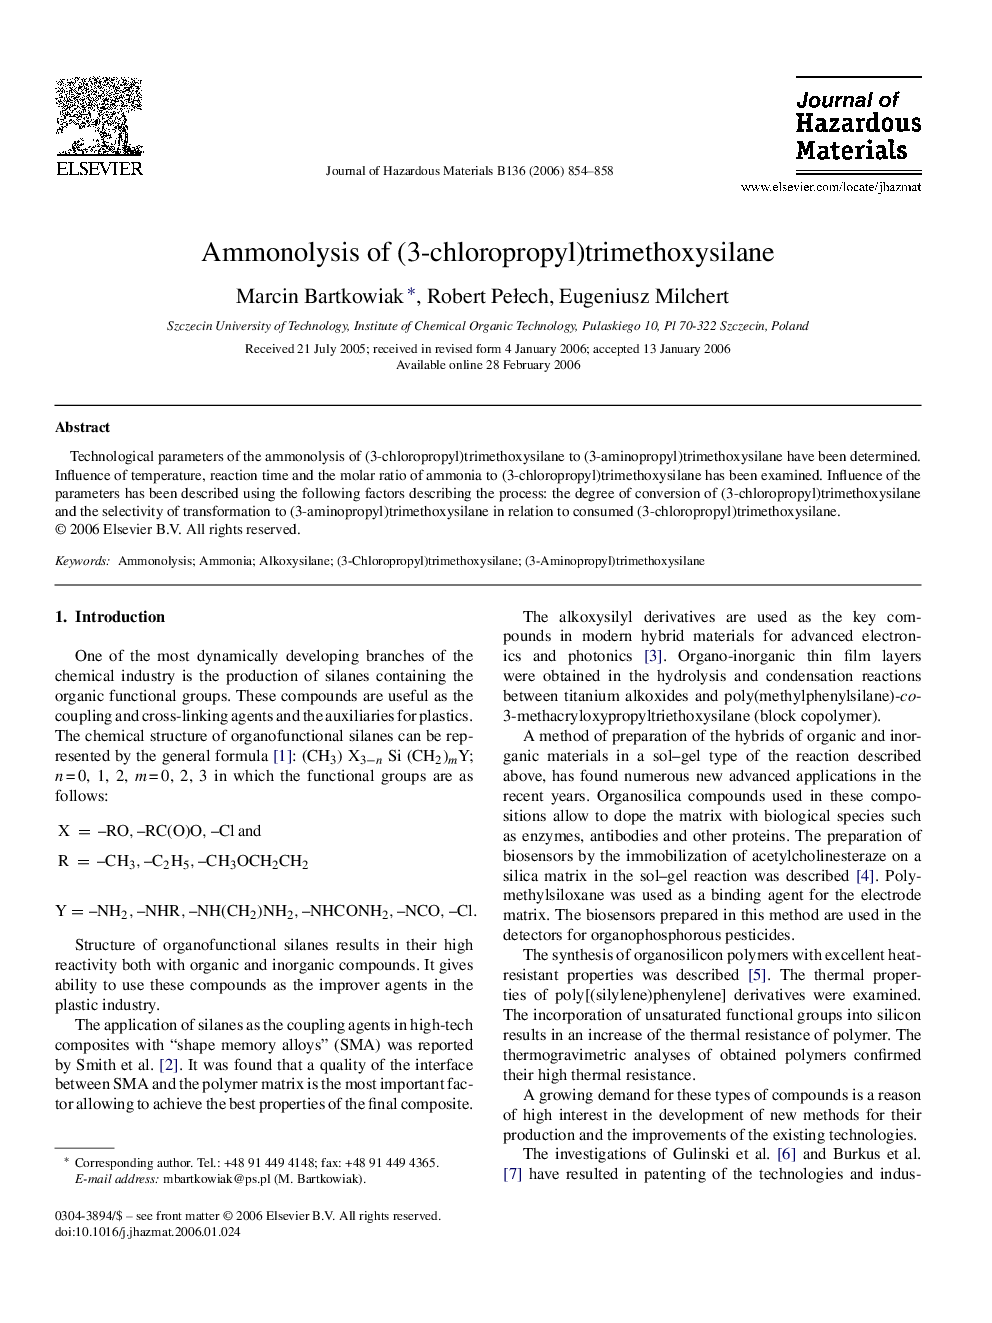 Ammonolysis of (3-chloropropyl)trimethoxysilane